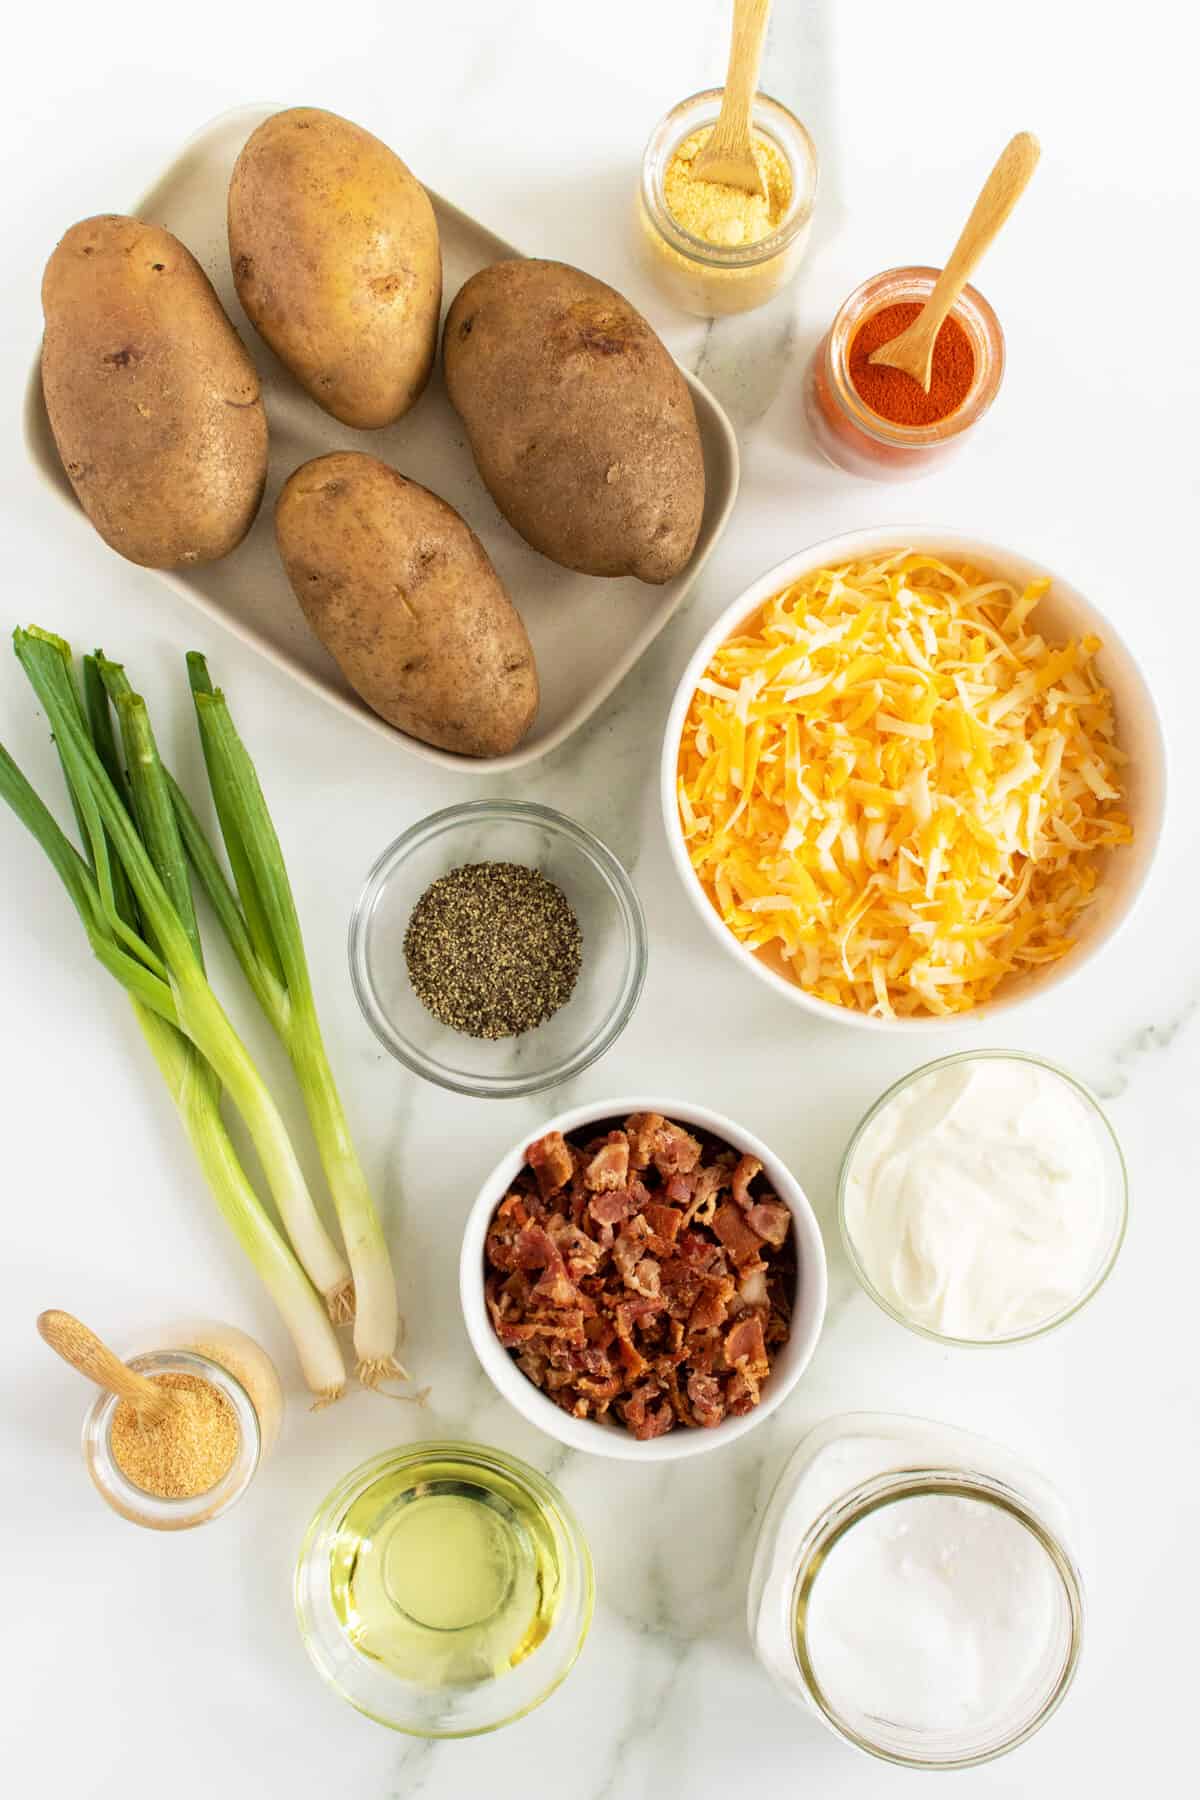 potato skins ingredients in white bowls